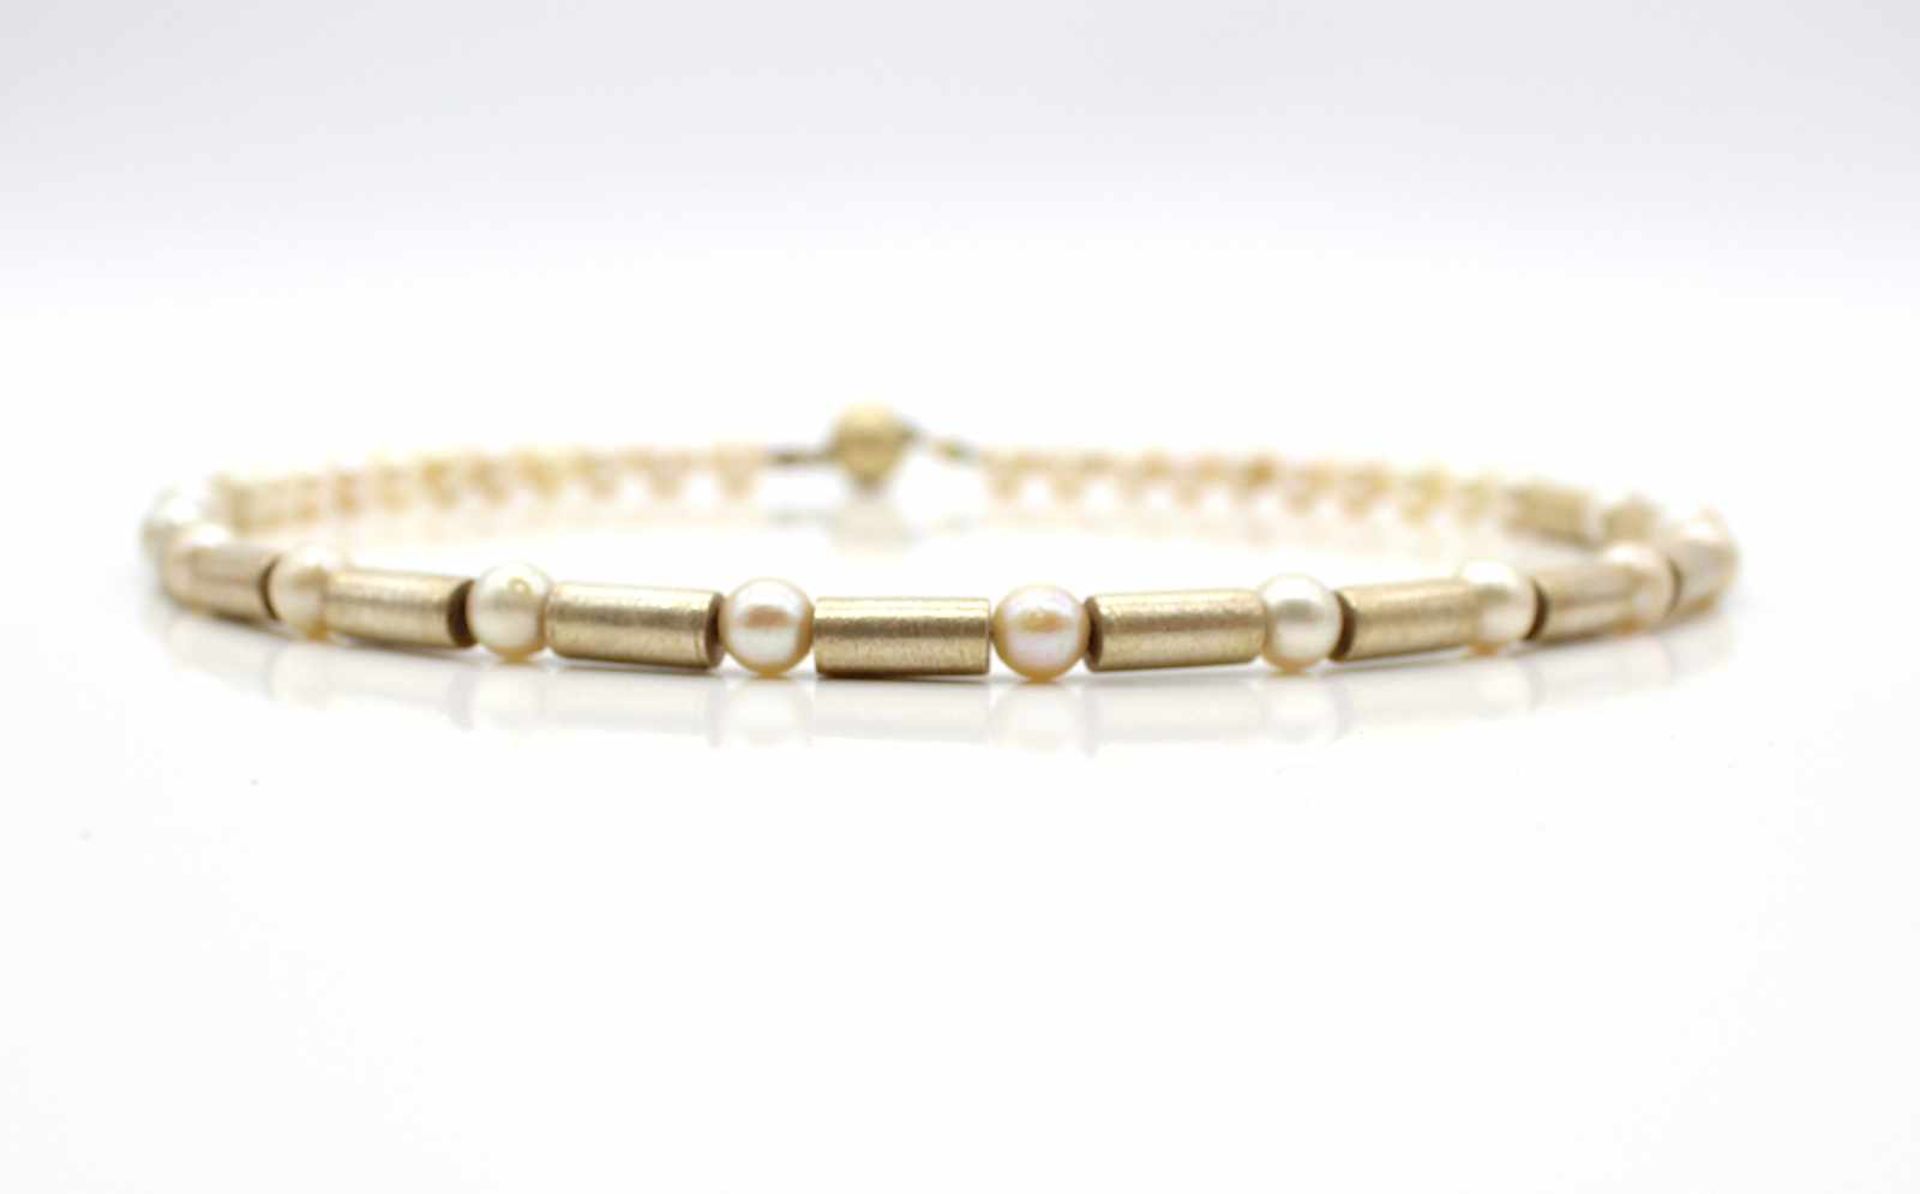 Perlenkette geprüft auf Silber / vergoldet. Länge 47 cm, mit MagnetschloßPearl necklace tested for - Image 3 of 3